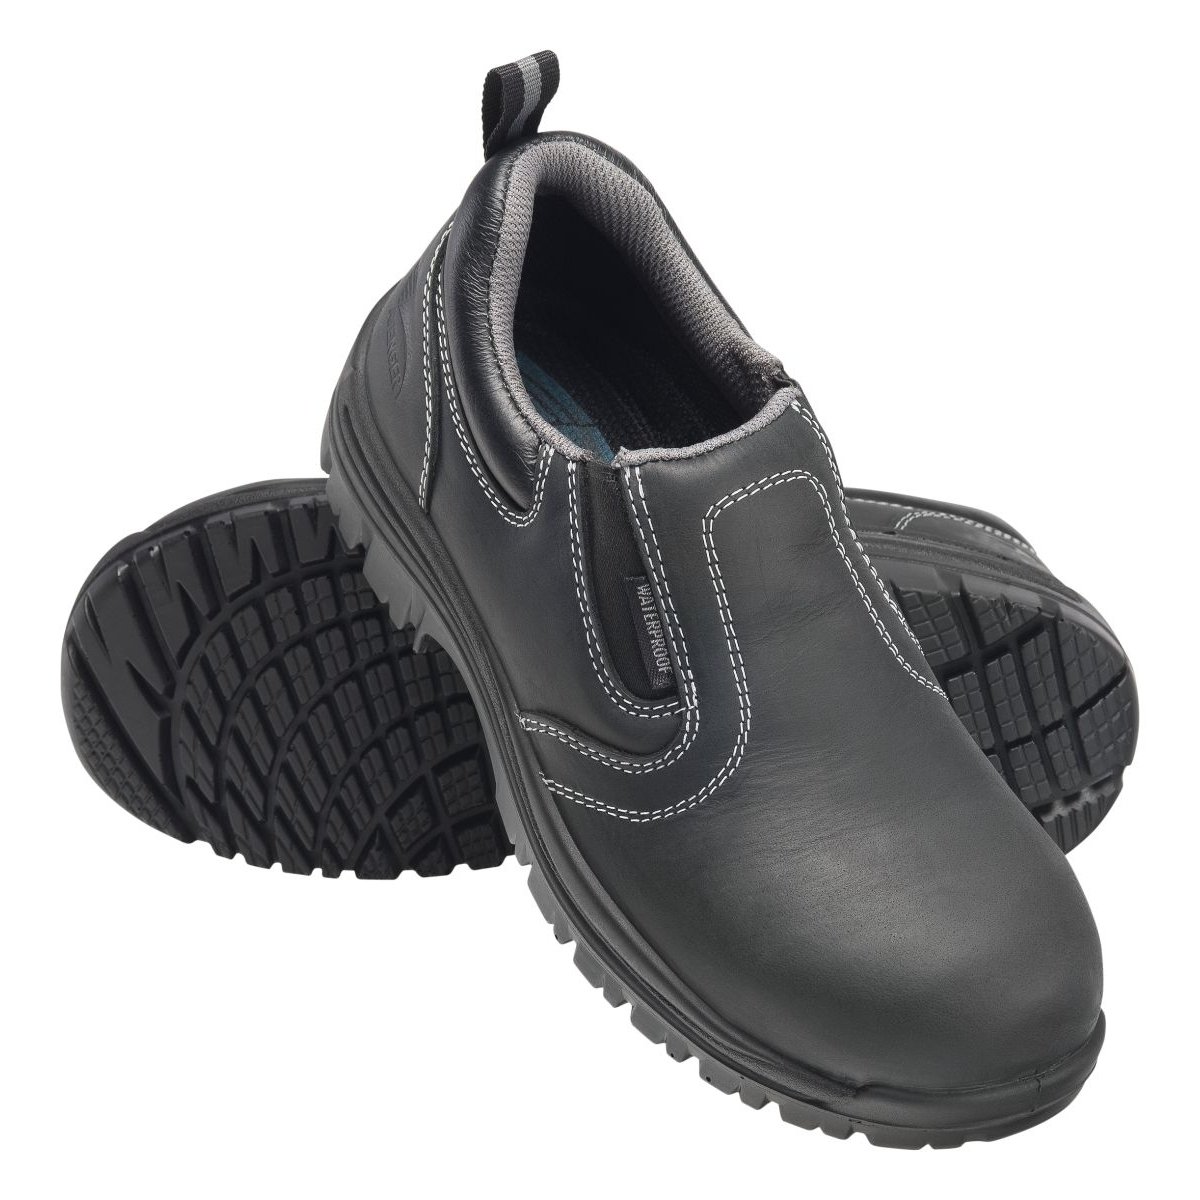 FSI FOOTWEAR SPECIALTIES INTERNATIONAL NAUTILUS Avenger Women's Foreman Slip-On Composite Toe PR Work Shoes Black - A7169 - BLACK, 7-W